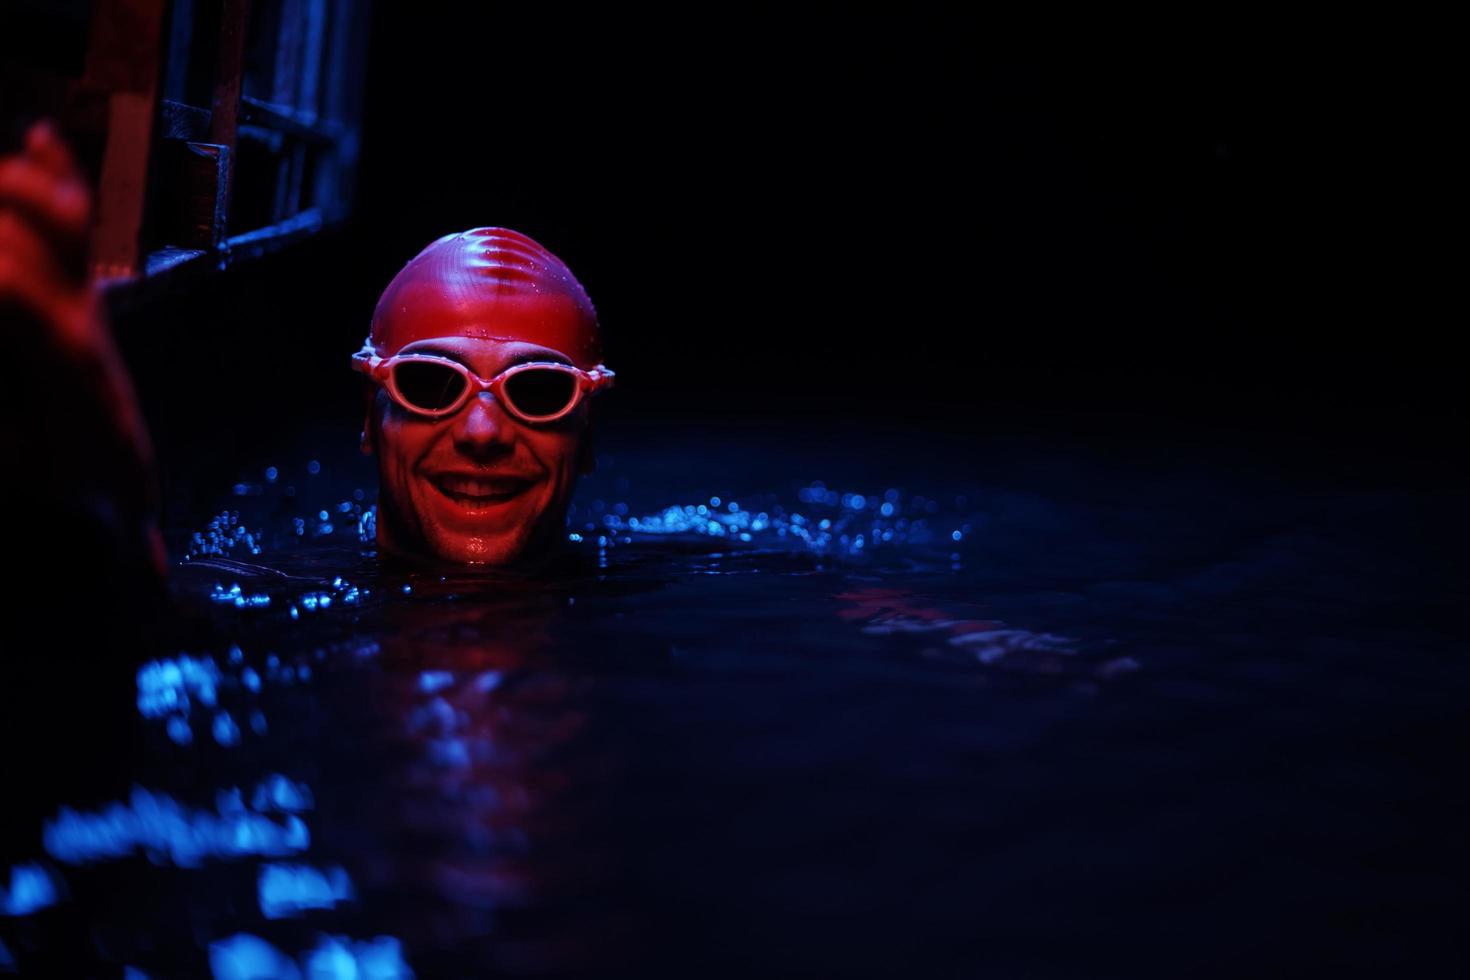 authentic triathlete swimmer having a break during hard training on night neon gel light photo